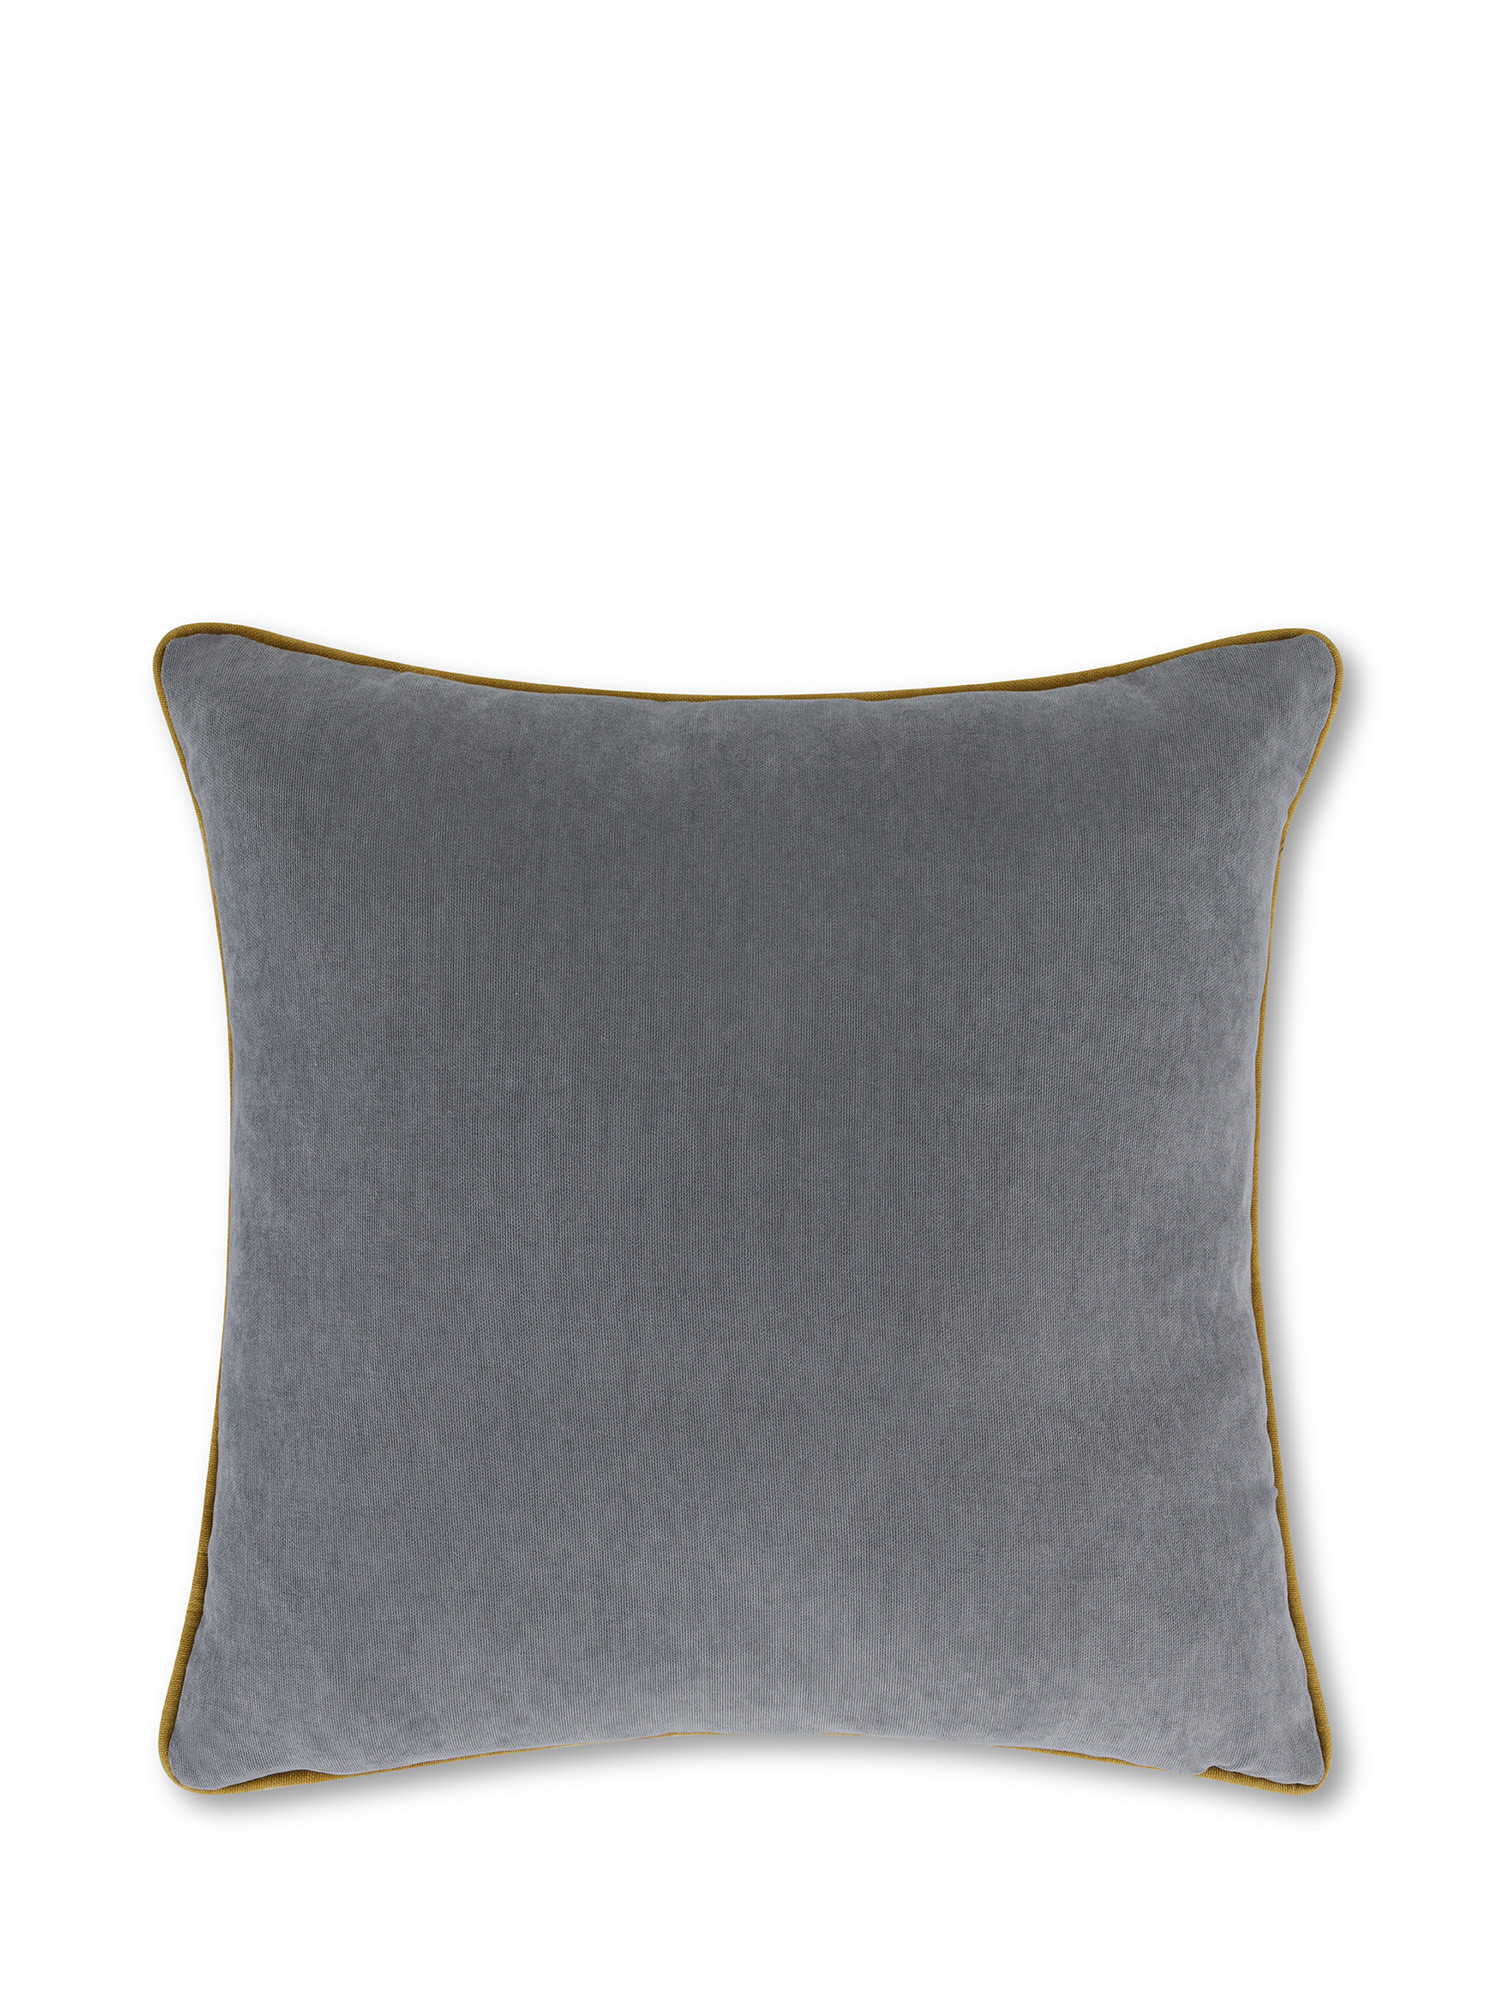 Cuscino in tessuto effetto Tweed a Spina di Pesce 45x45 cm, Grigio, large image number 1